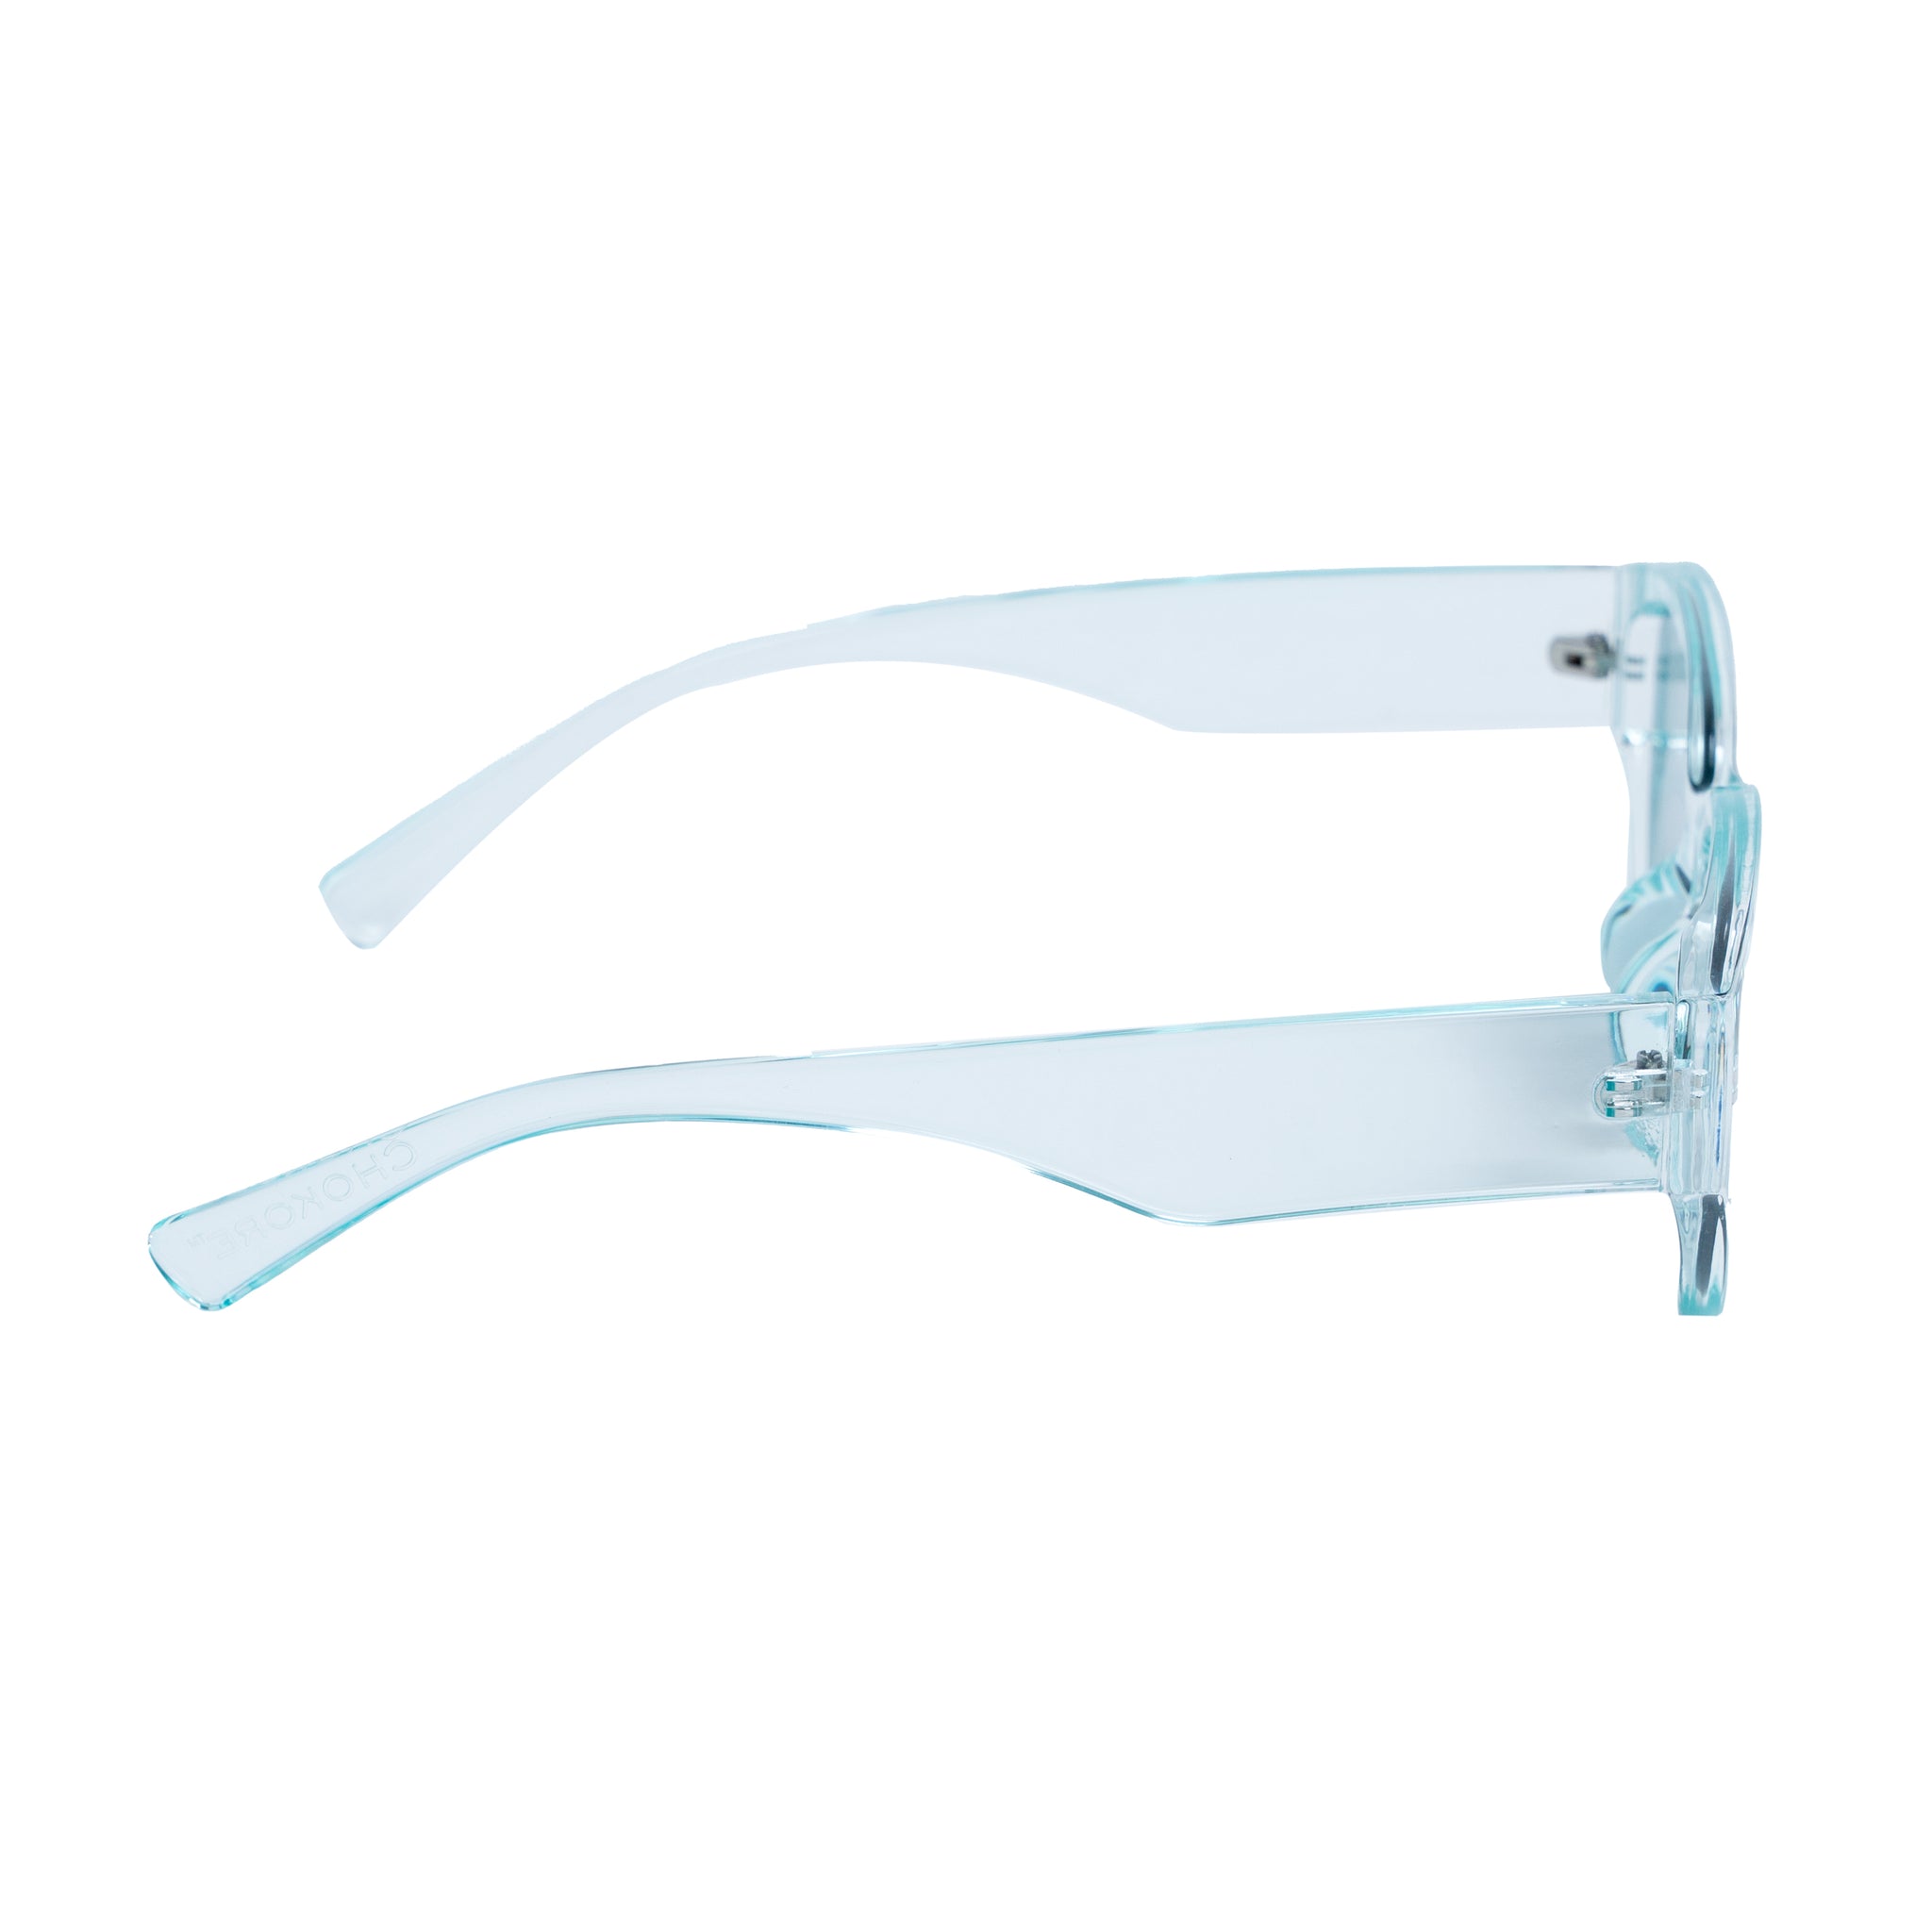 Chokore Polarized Travel Sunglasses with UV 400 Protection (Blue)